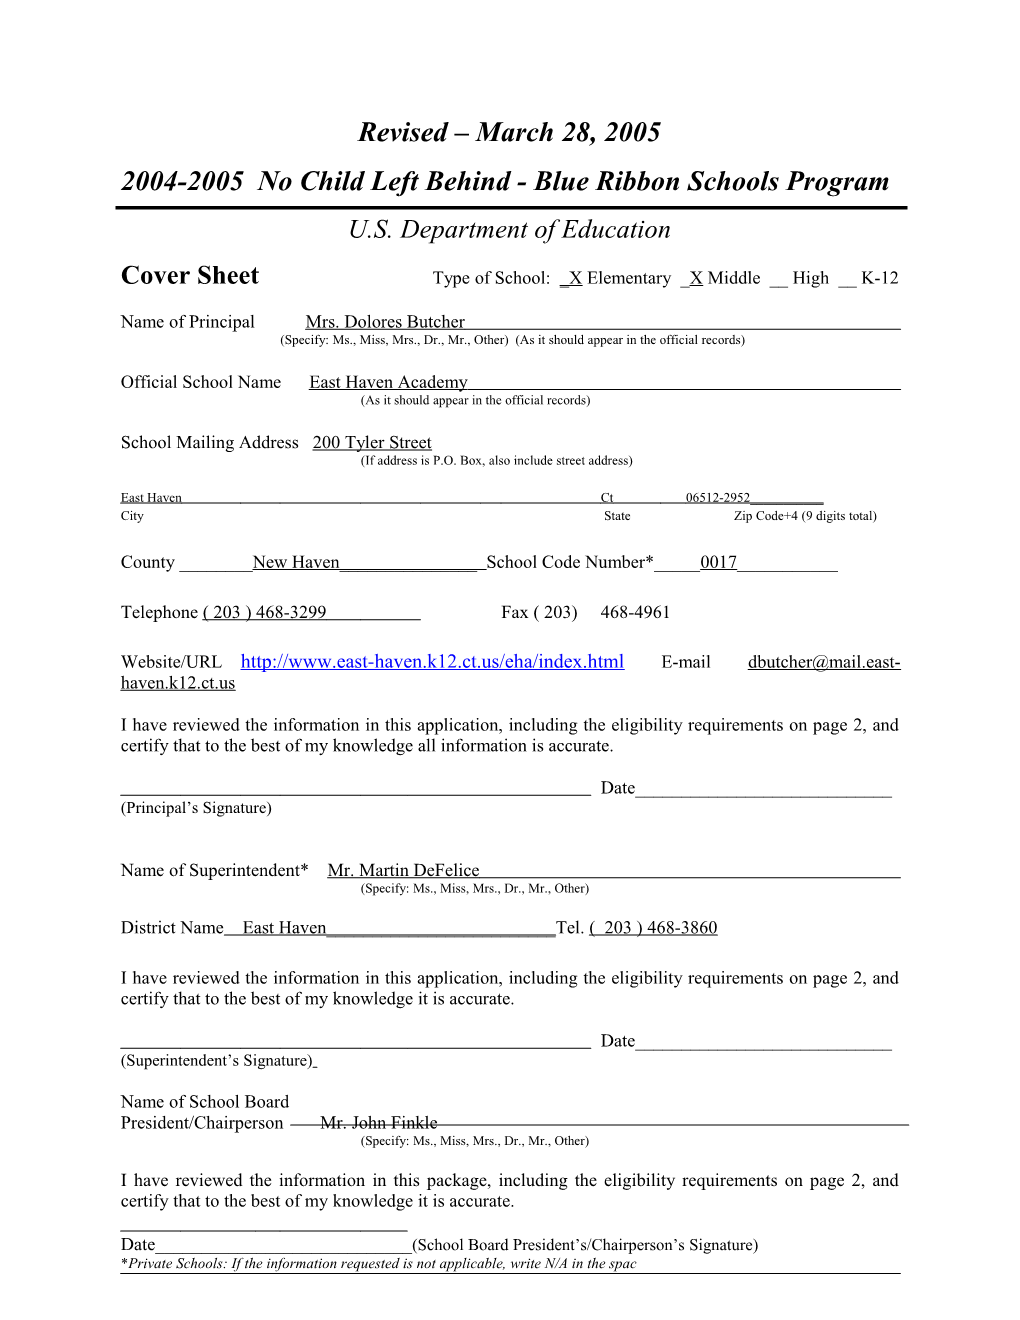 East Haven Academy Application: 2004-2005, No Child Left Behind - Blue Ribbon Schools Program